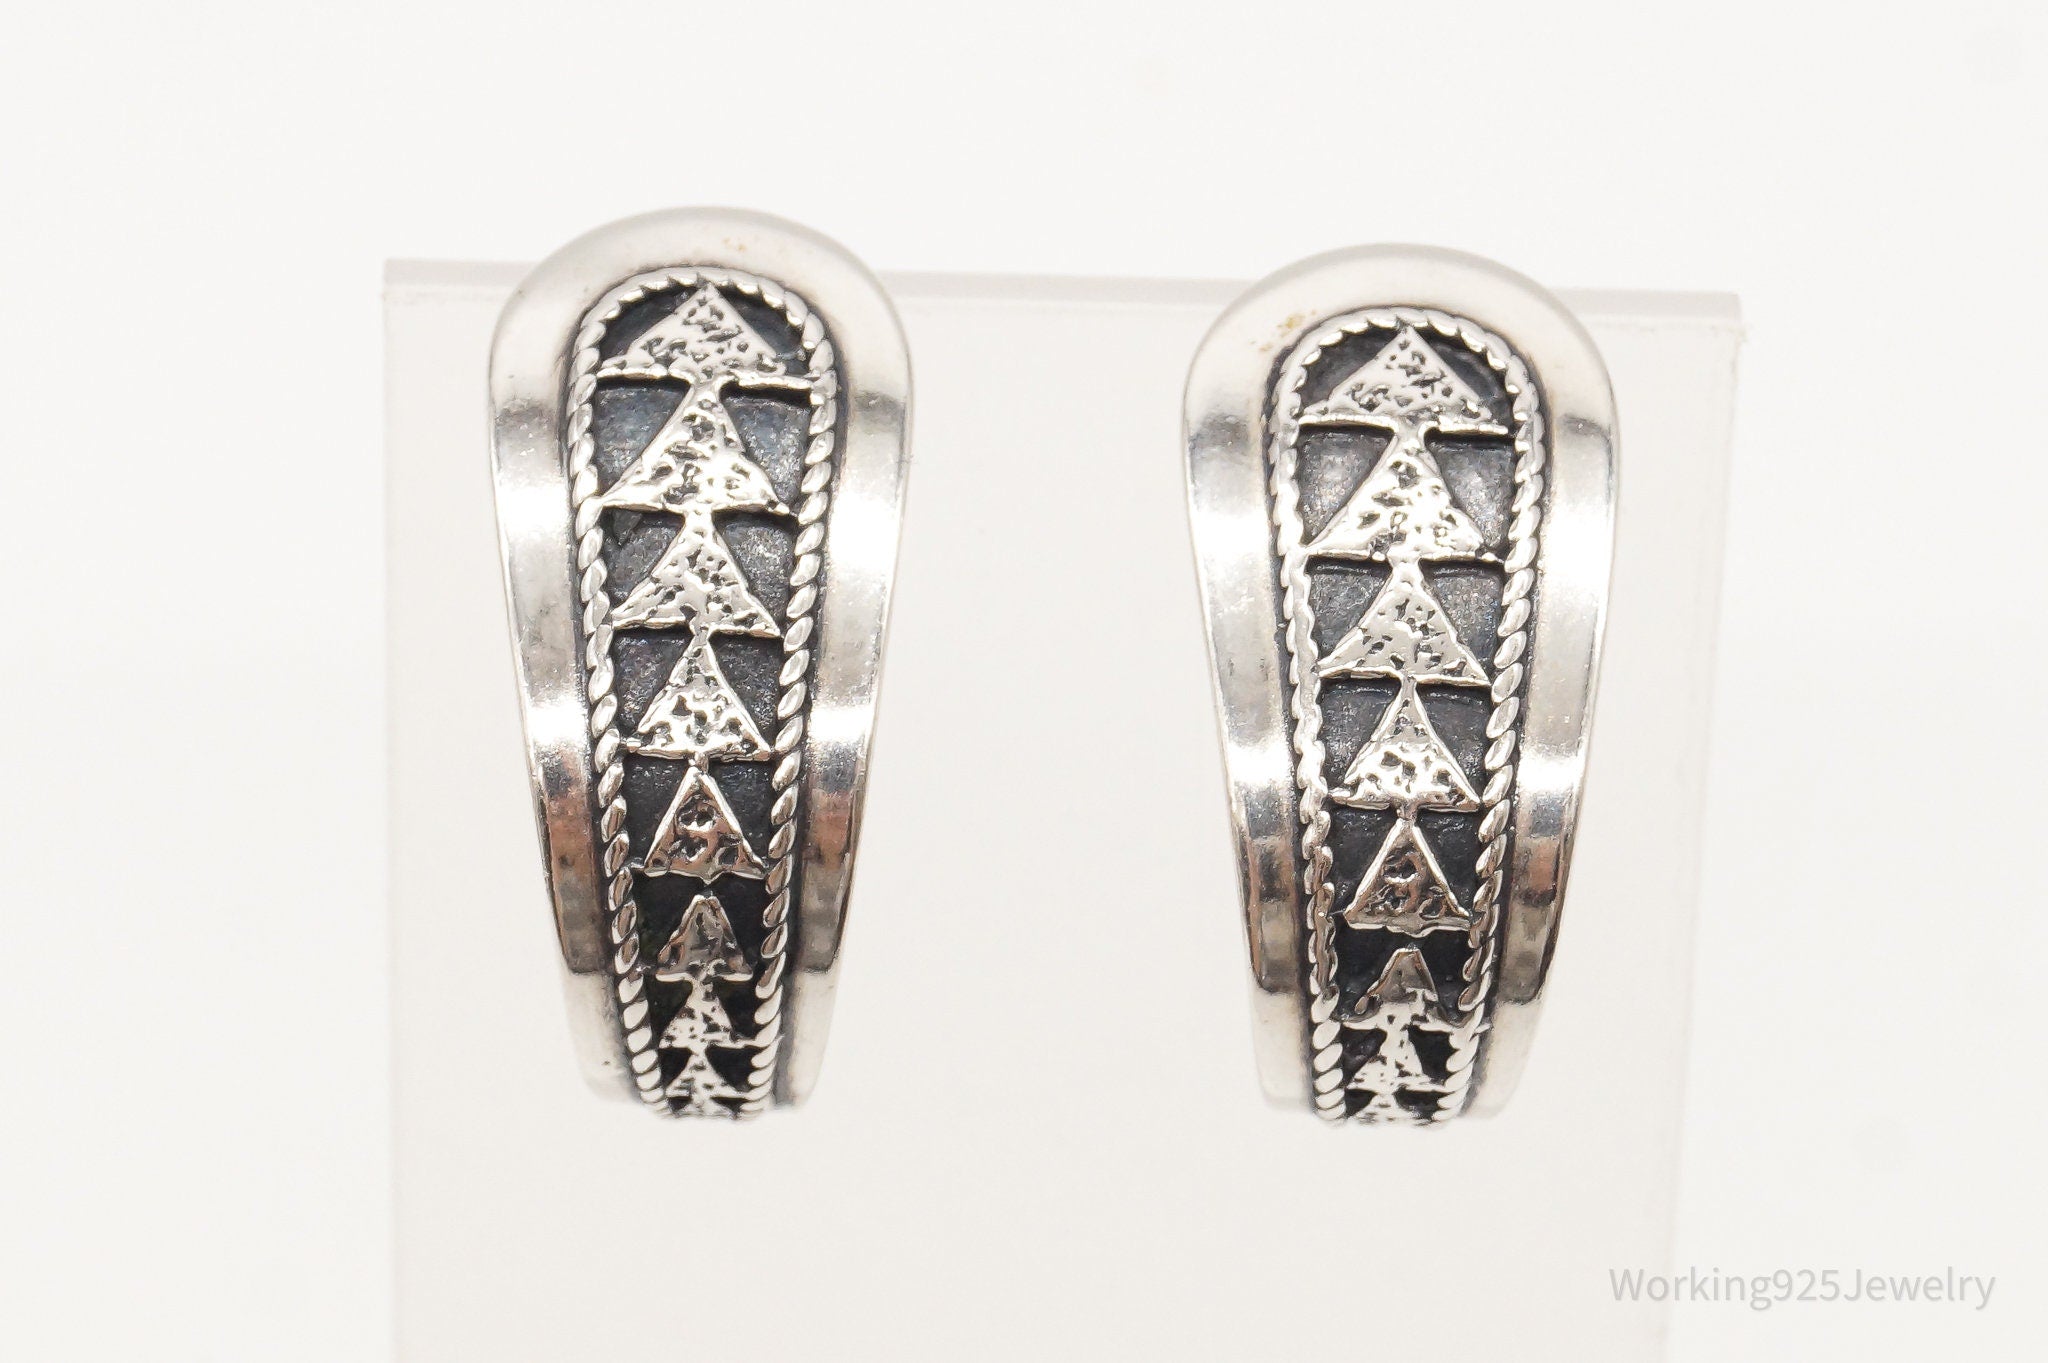 Western Designer Carolyn Pollack Relios RMT Tribal Sterling Silver Earrings